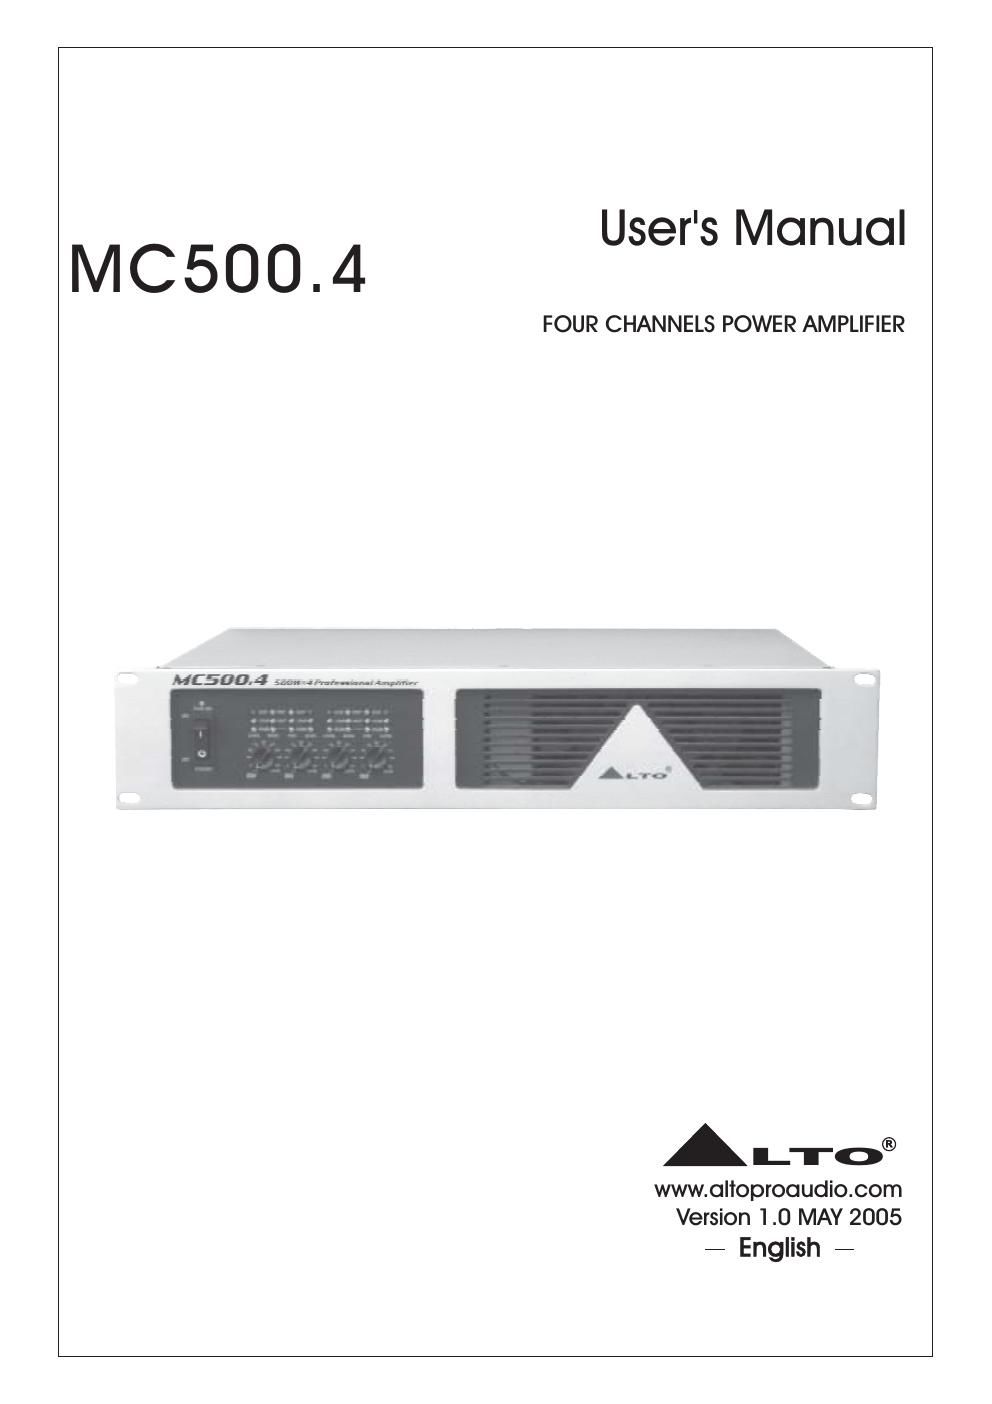 alto mc 500 4 users manual